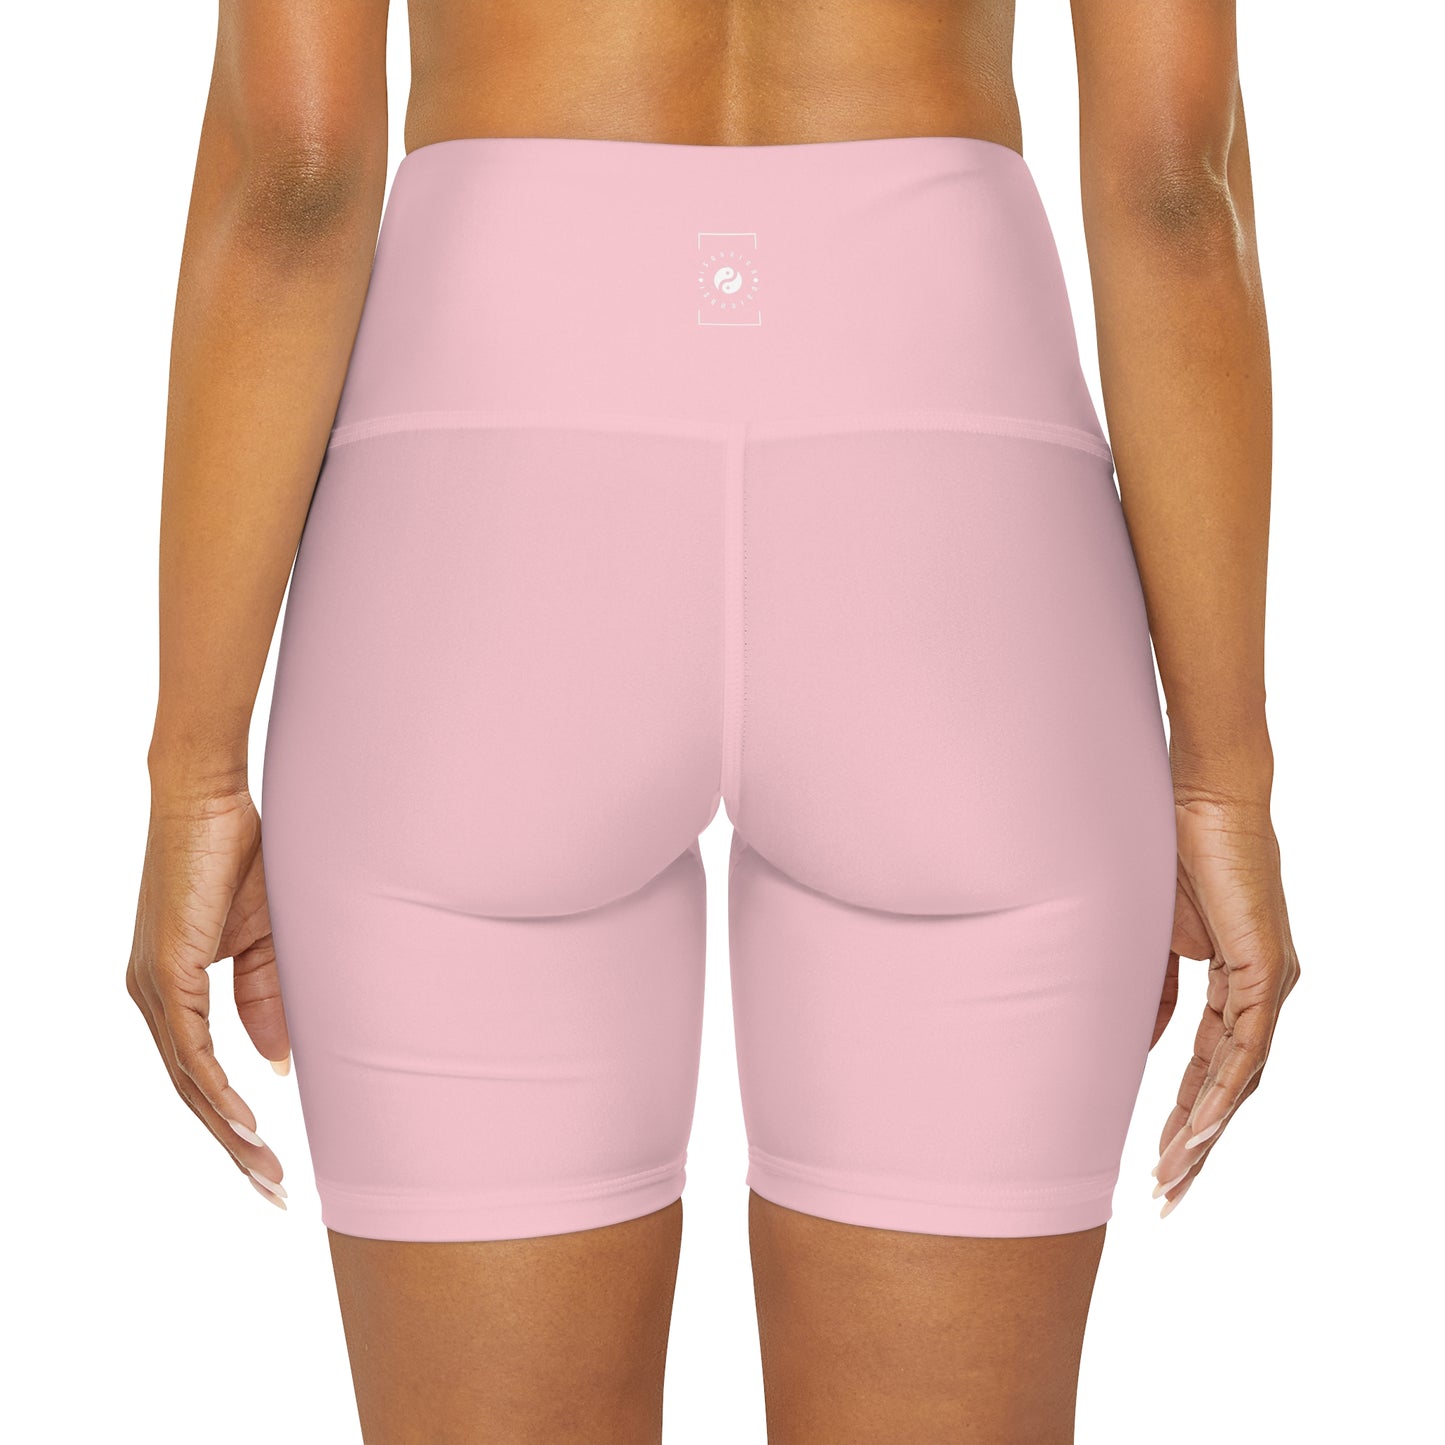 FFCCD4 Light Pink - shorts